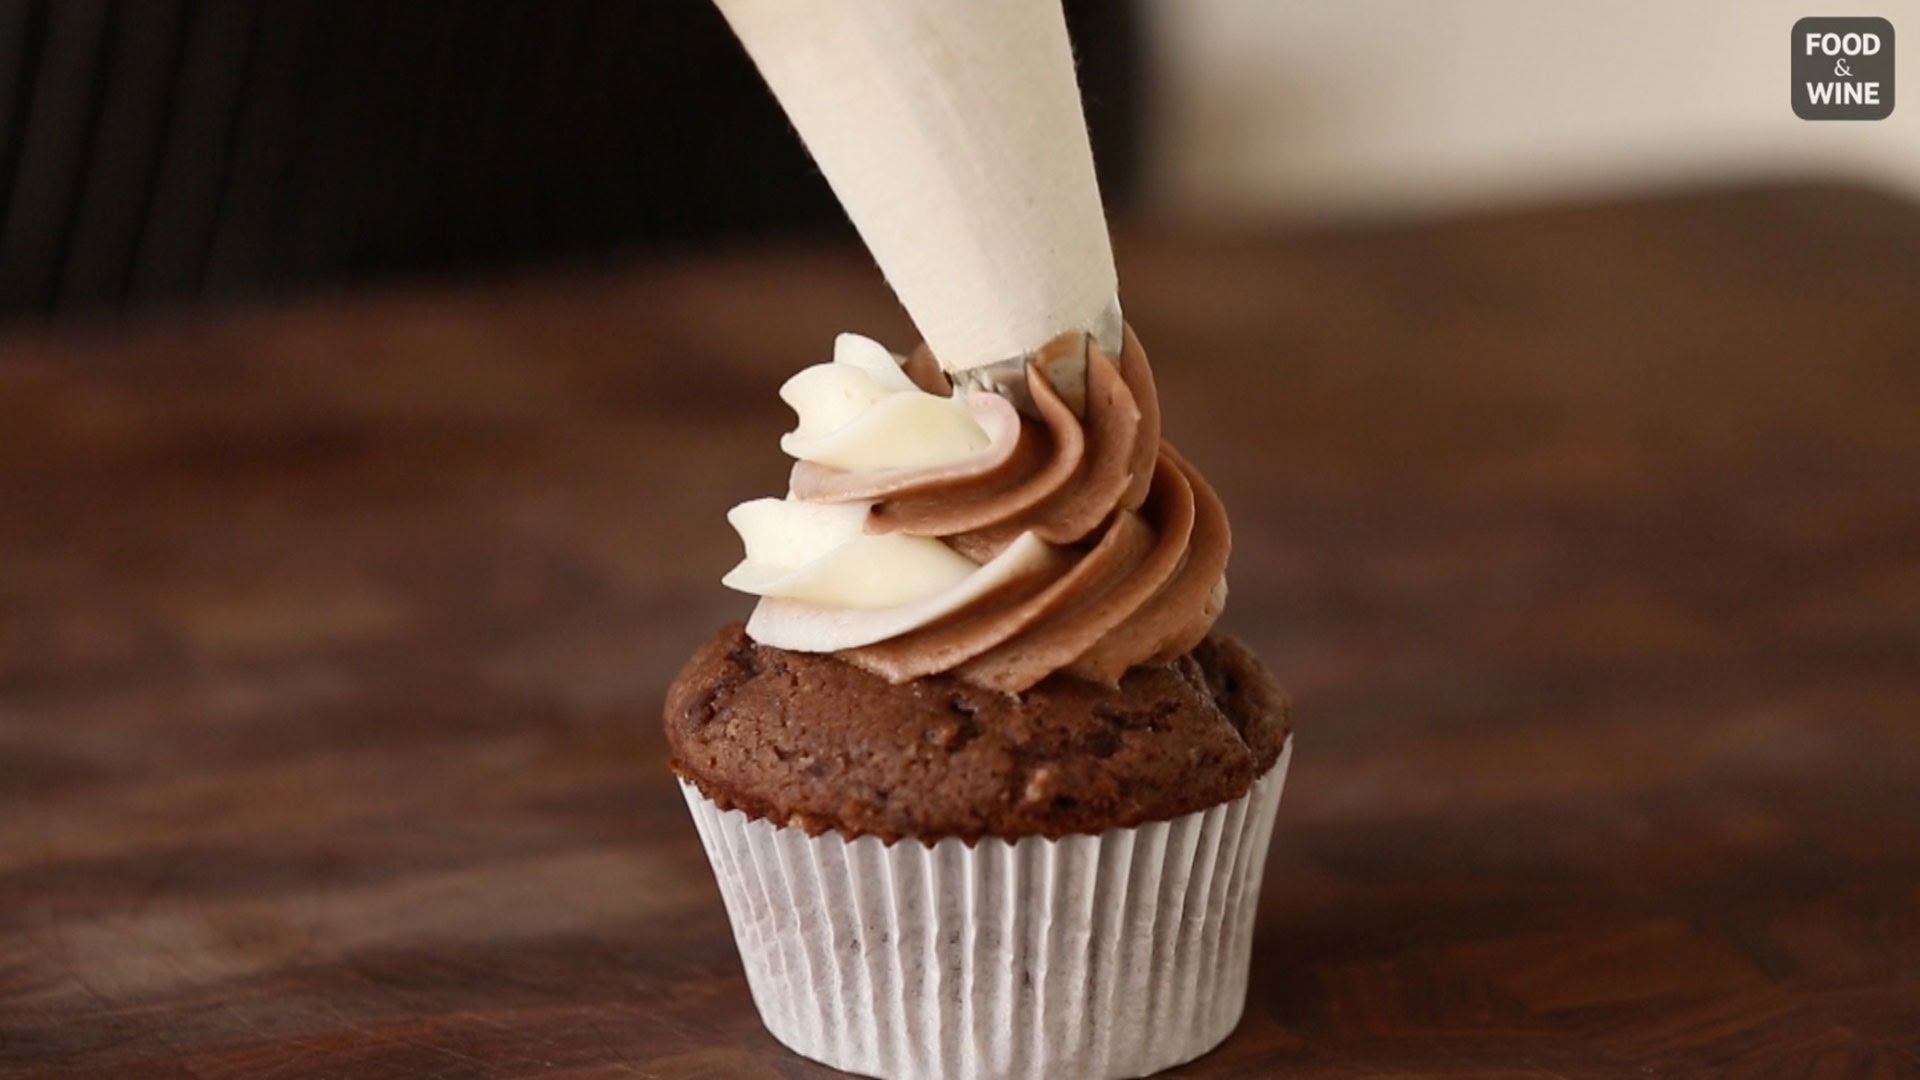 How to Make Swirled Cupcake Frosting | Food & Wine - YouTube